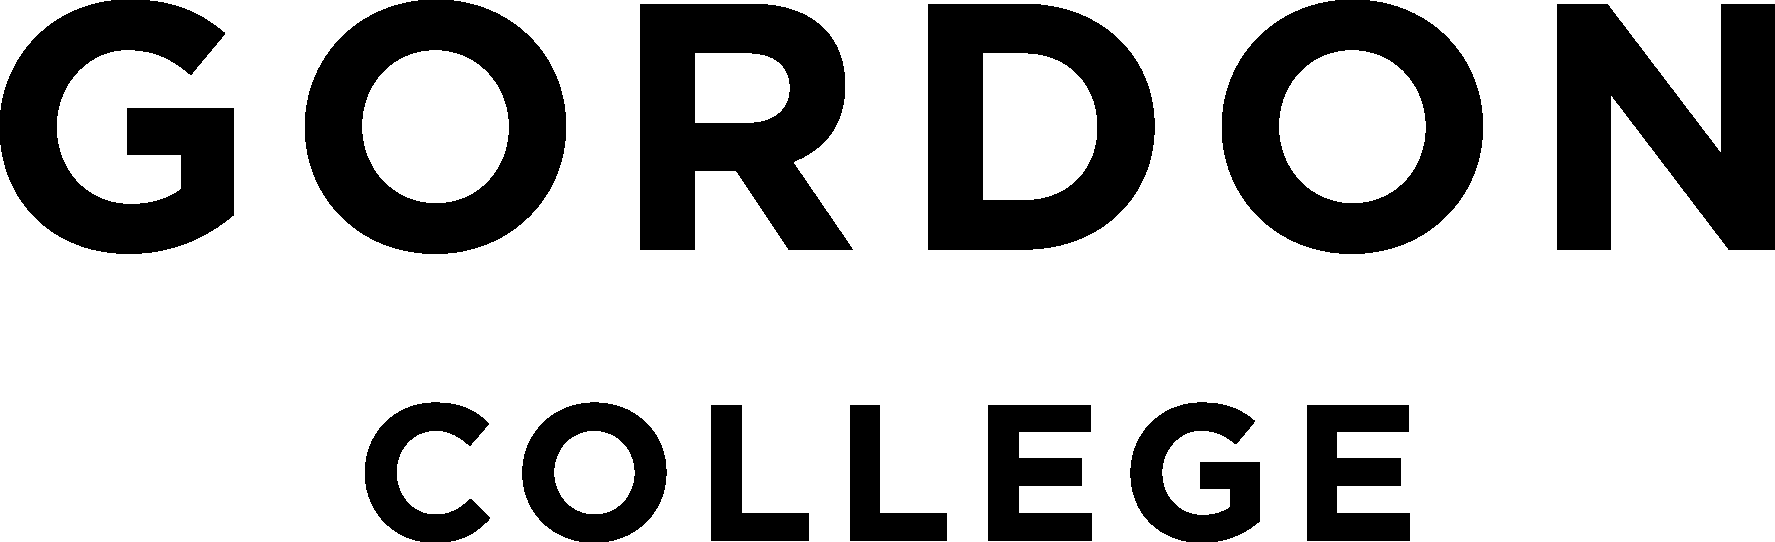 Wordmark centered in black